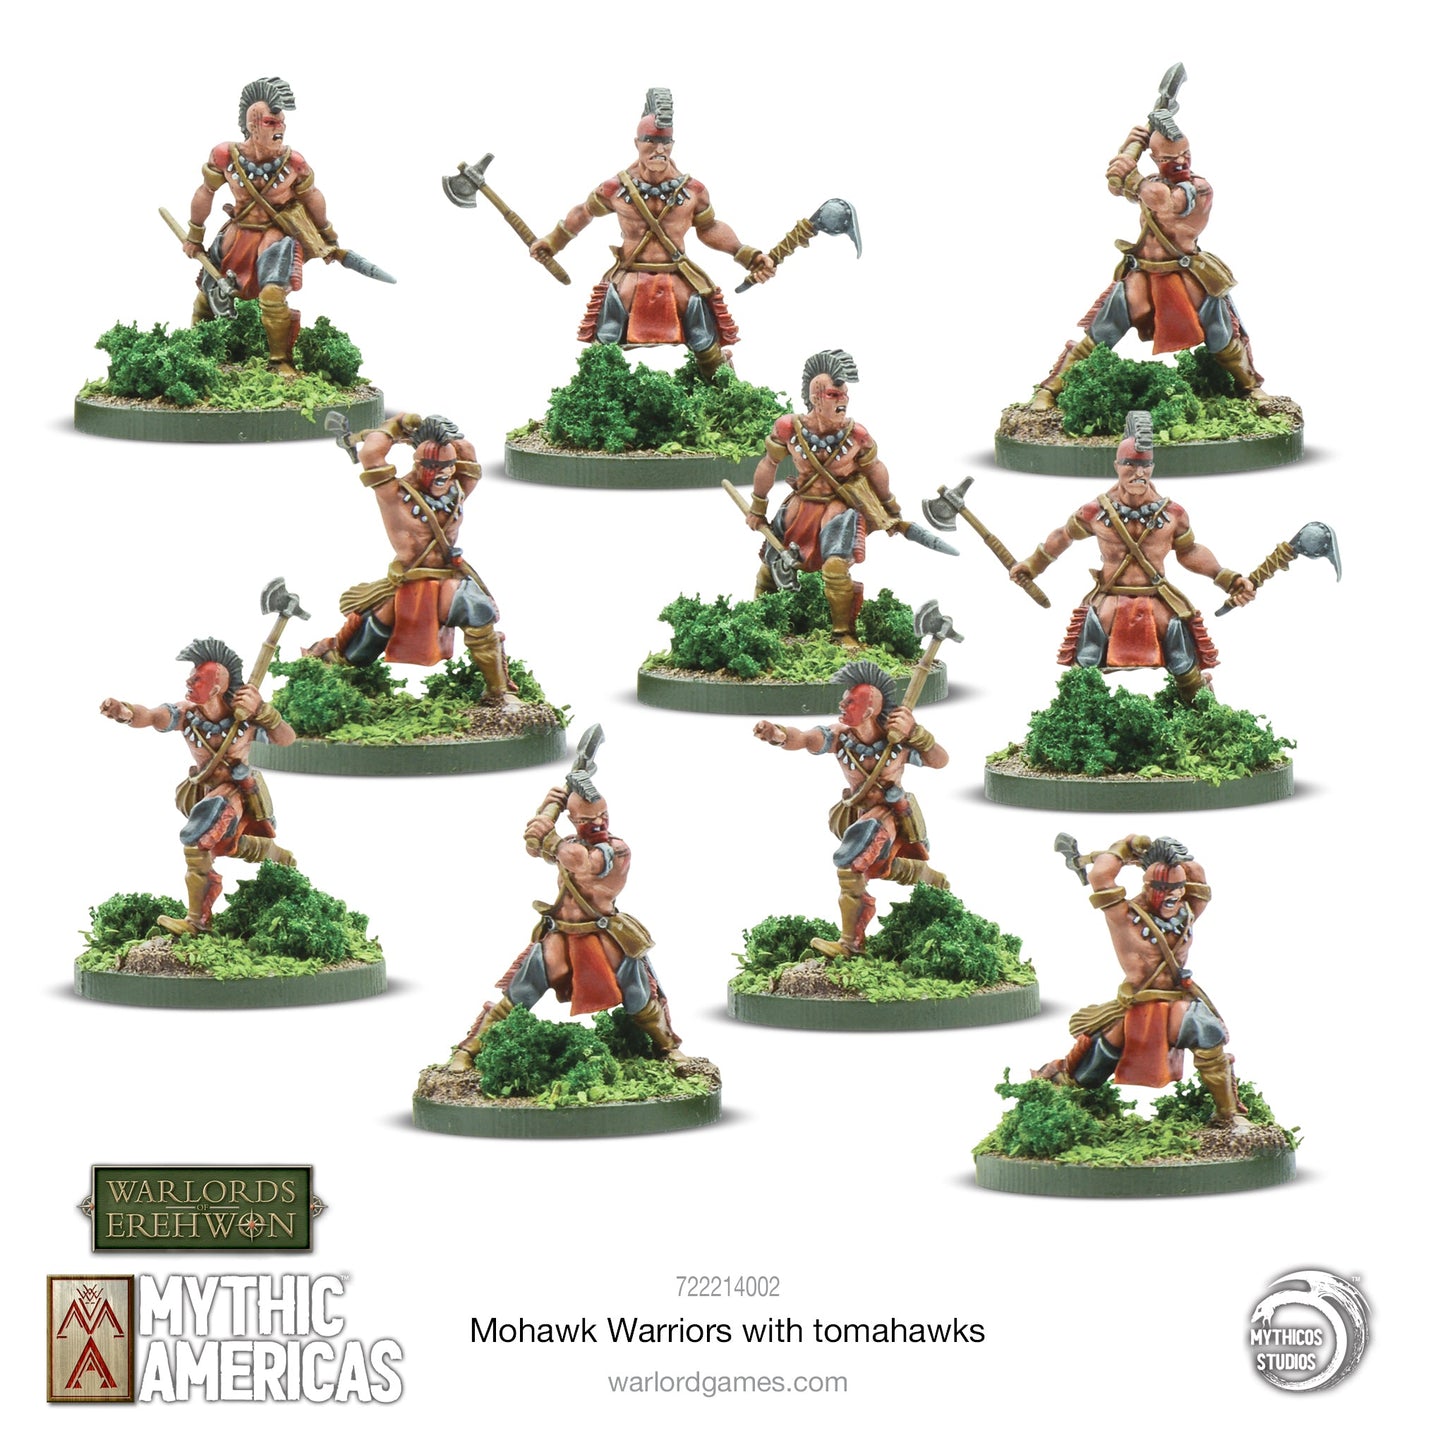 Mohawk Warriors